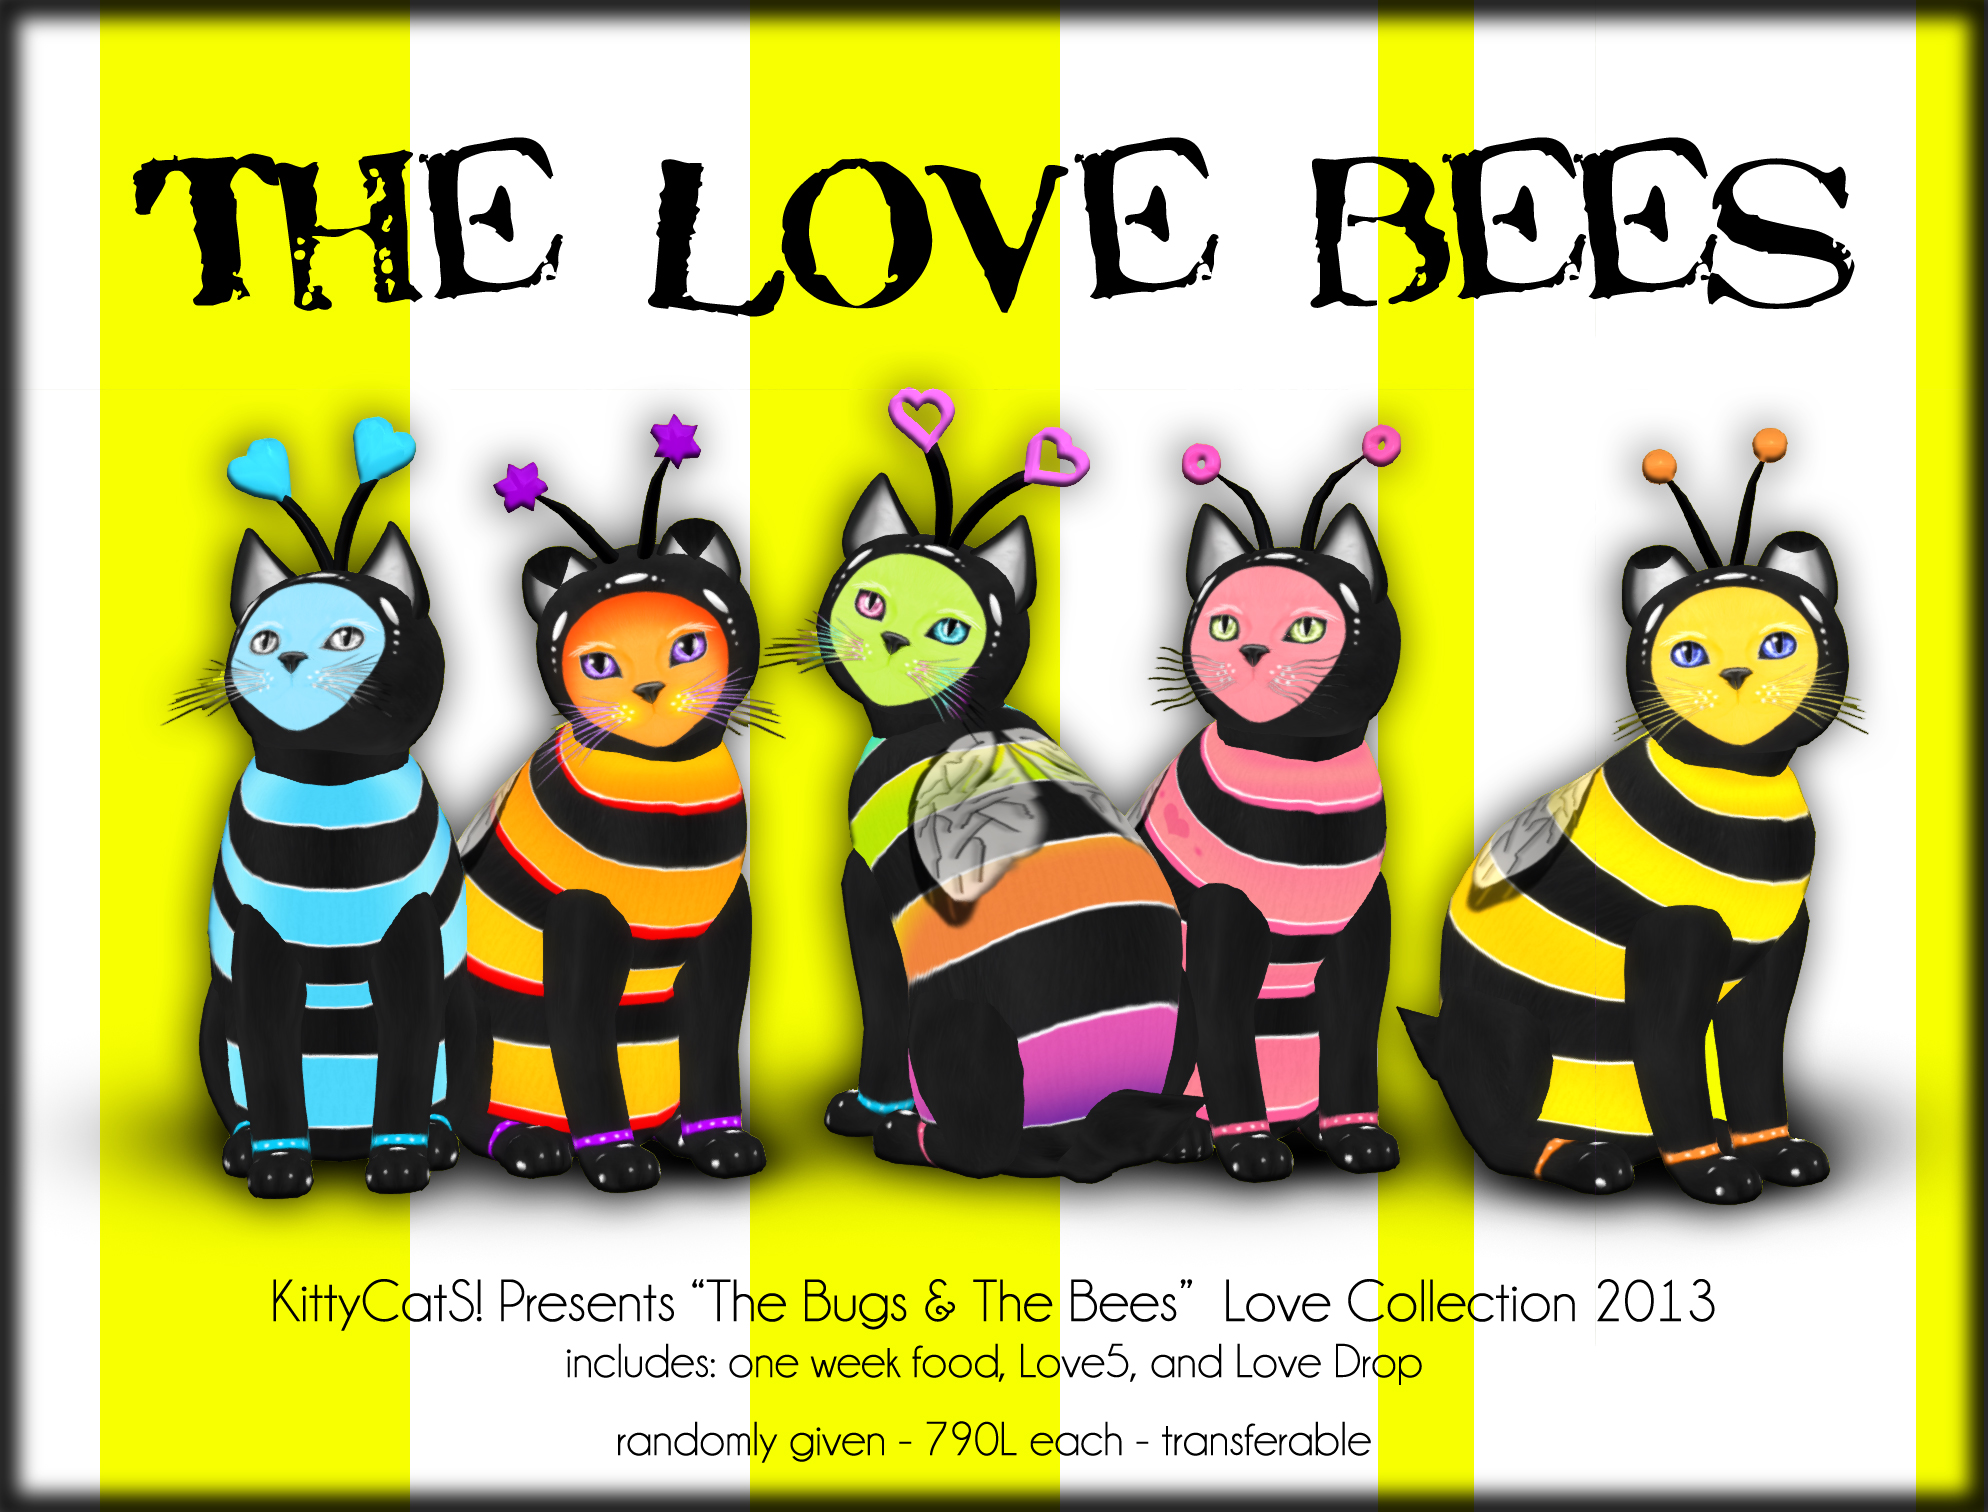 [Image: new-love-bee-ad-sm.jpg]